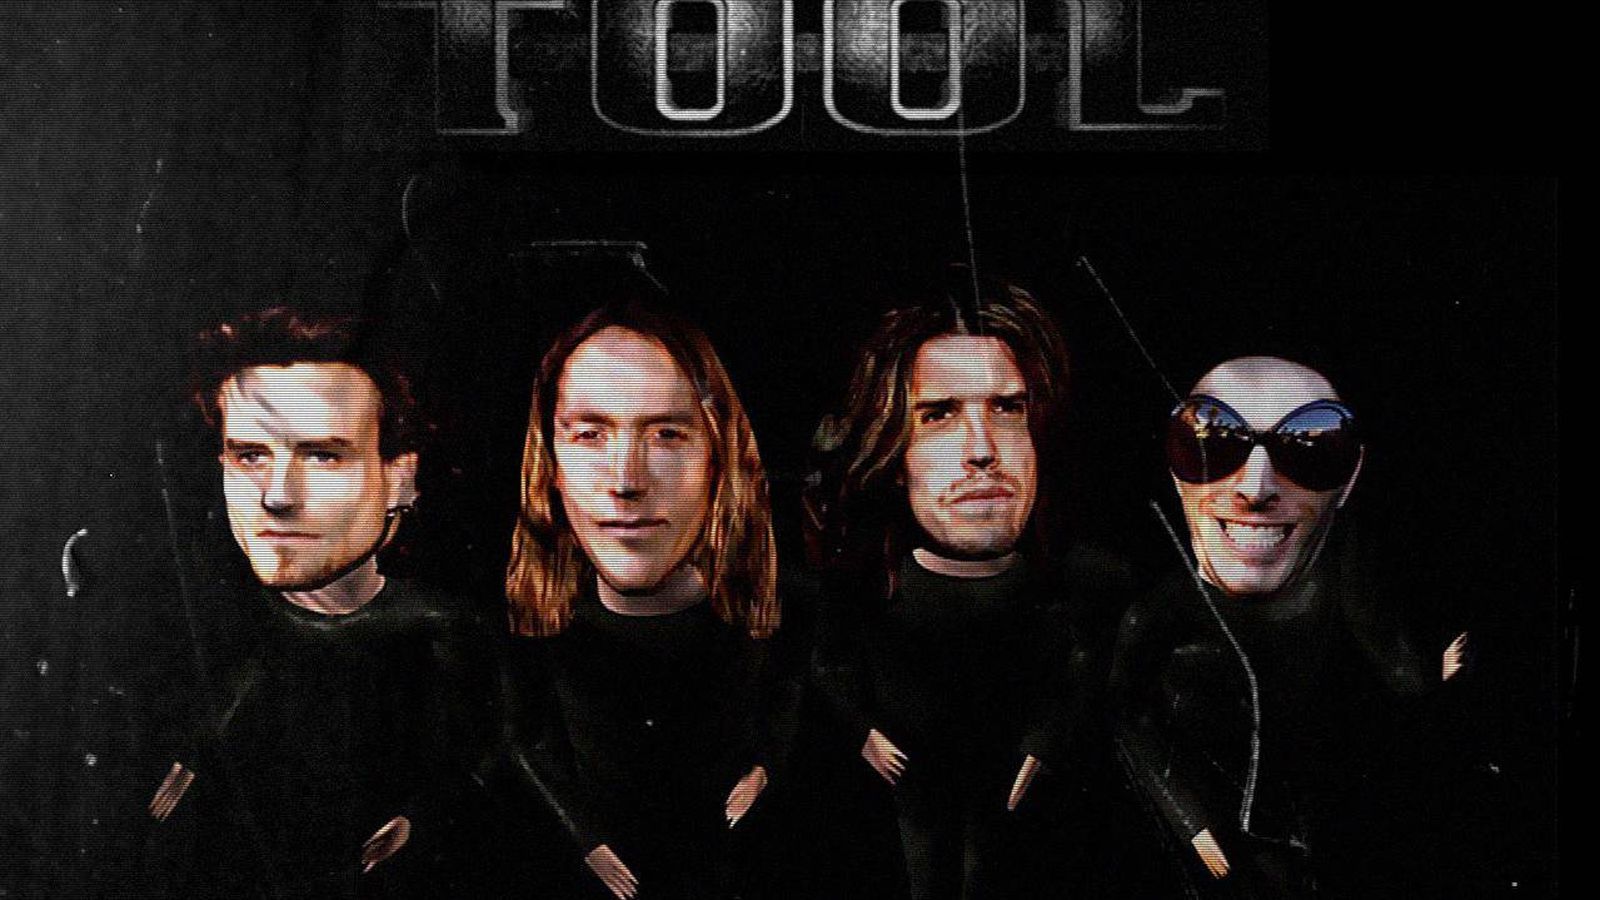 Foto: La banda de rock metal Tool en una imagen promocional